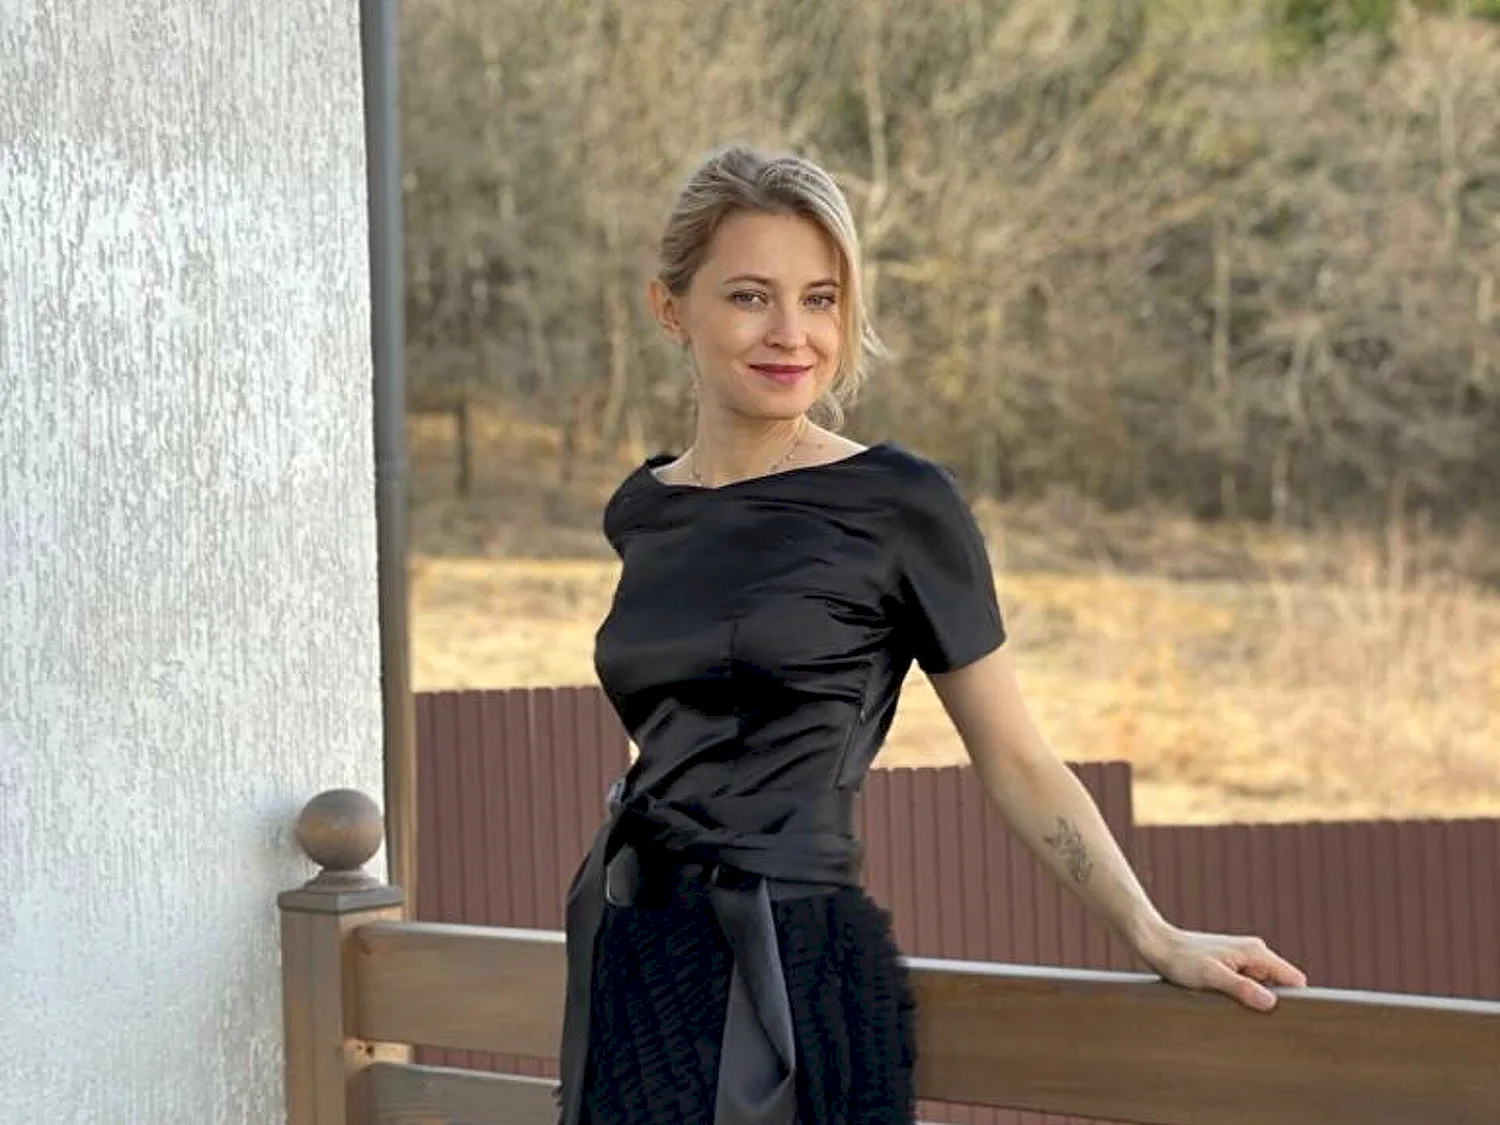 Наталья Поклонская